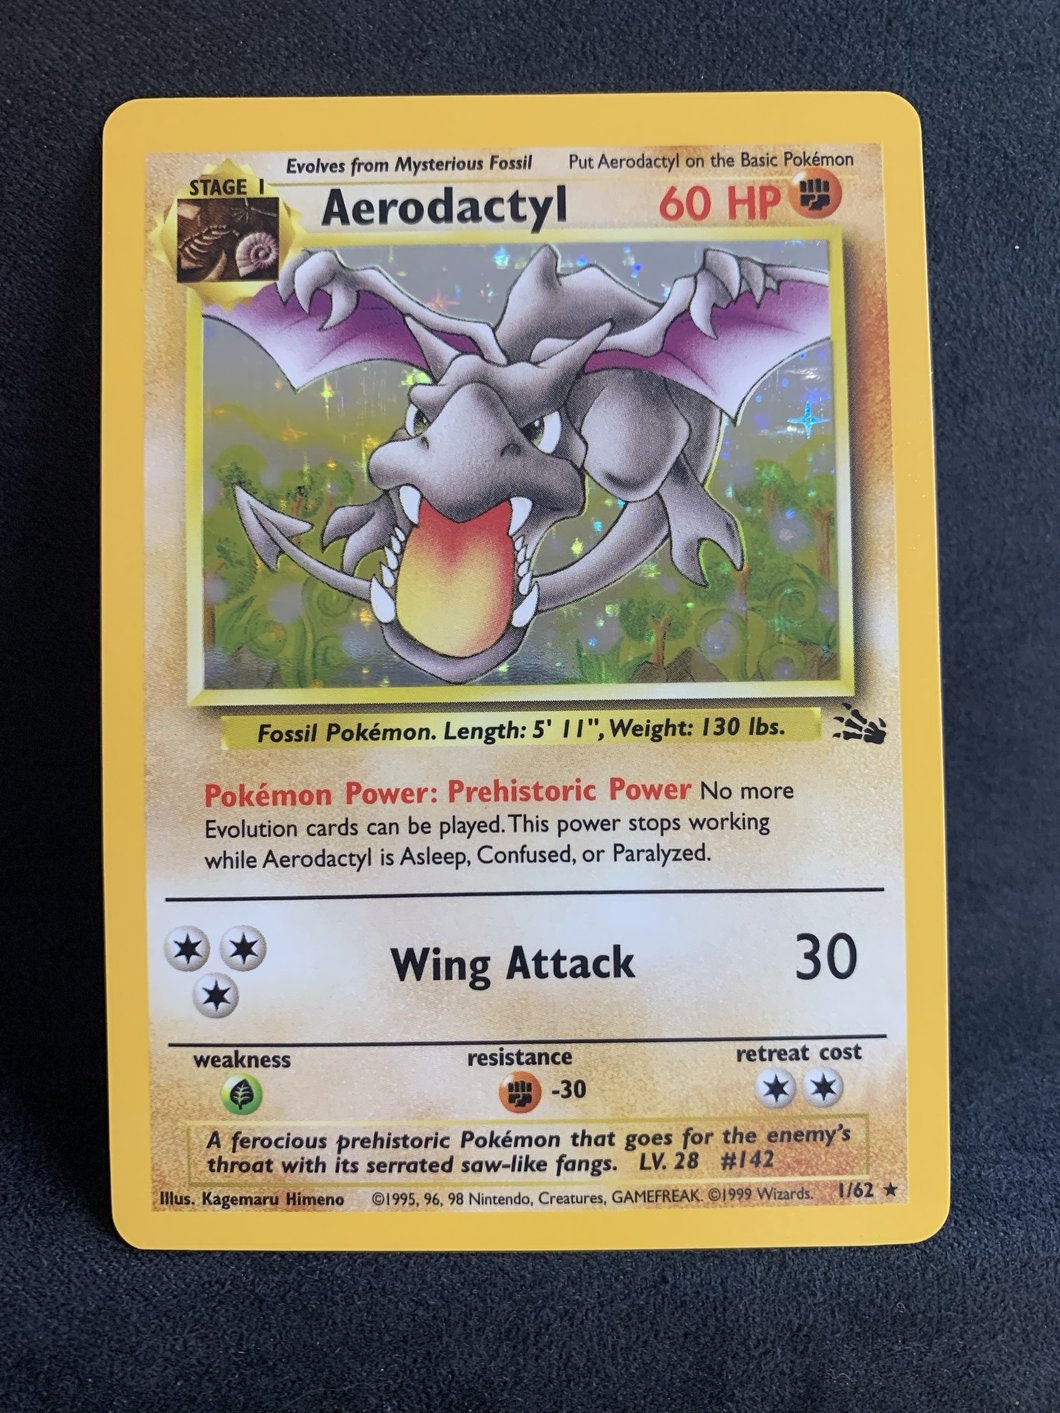 Pokemon Card : Aerodactyl Fossil 1/62 GCG 9.5 Gem Mint for Sale in